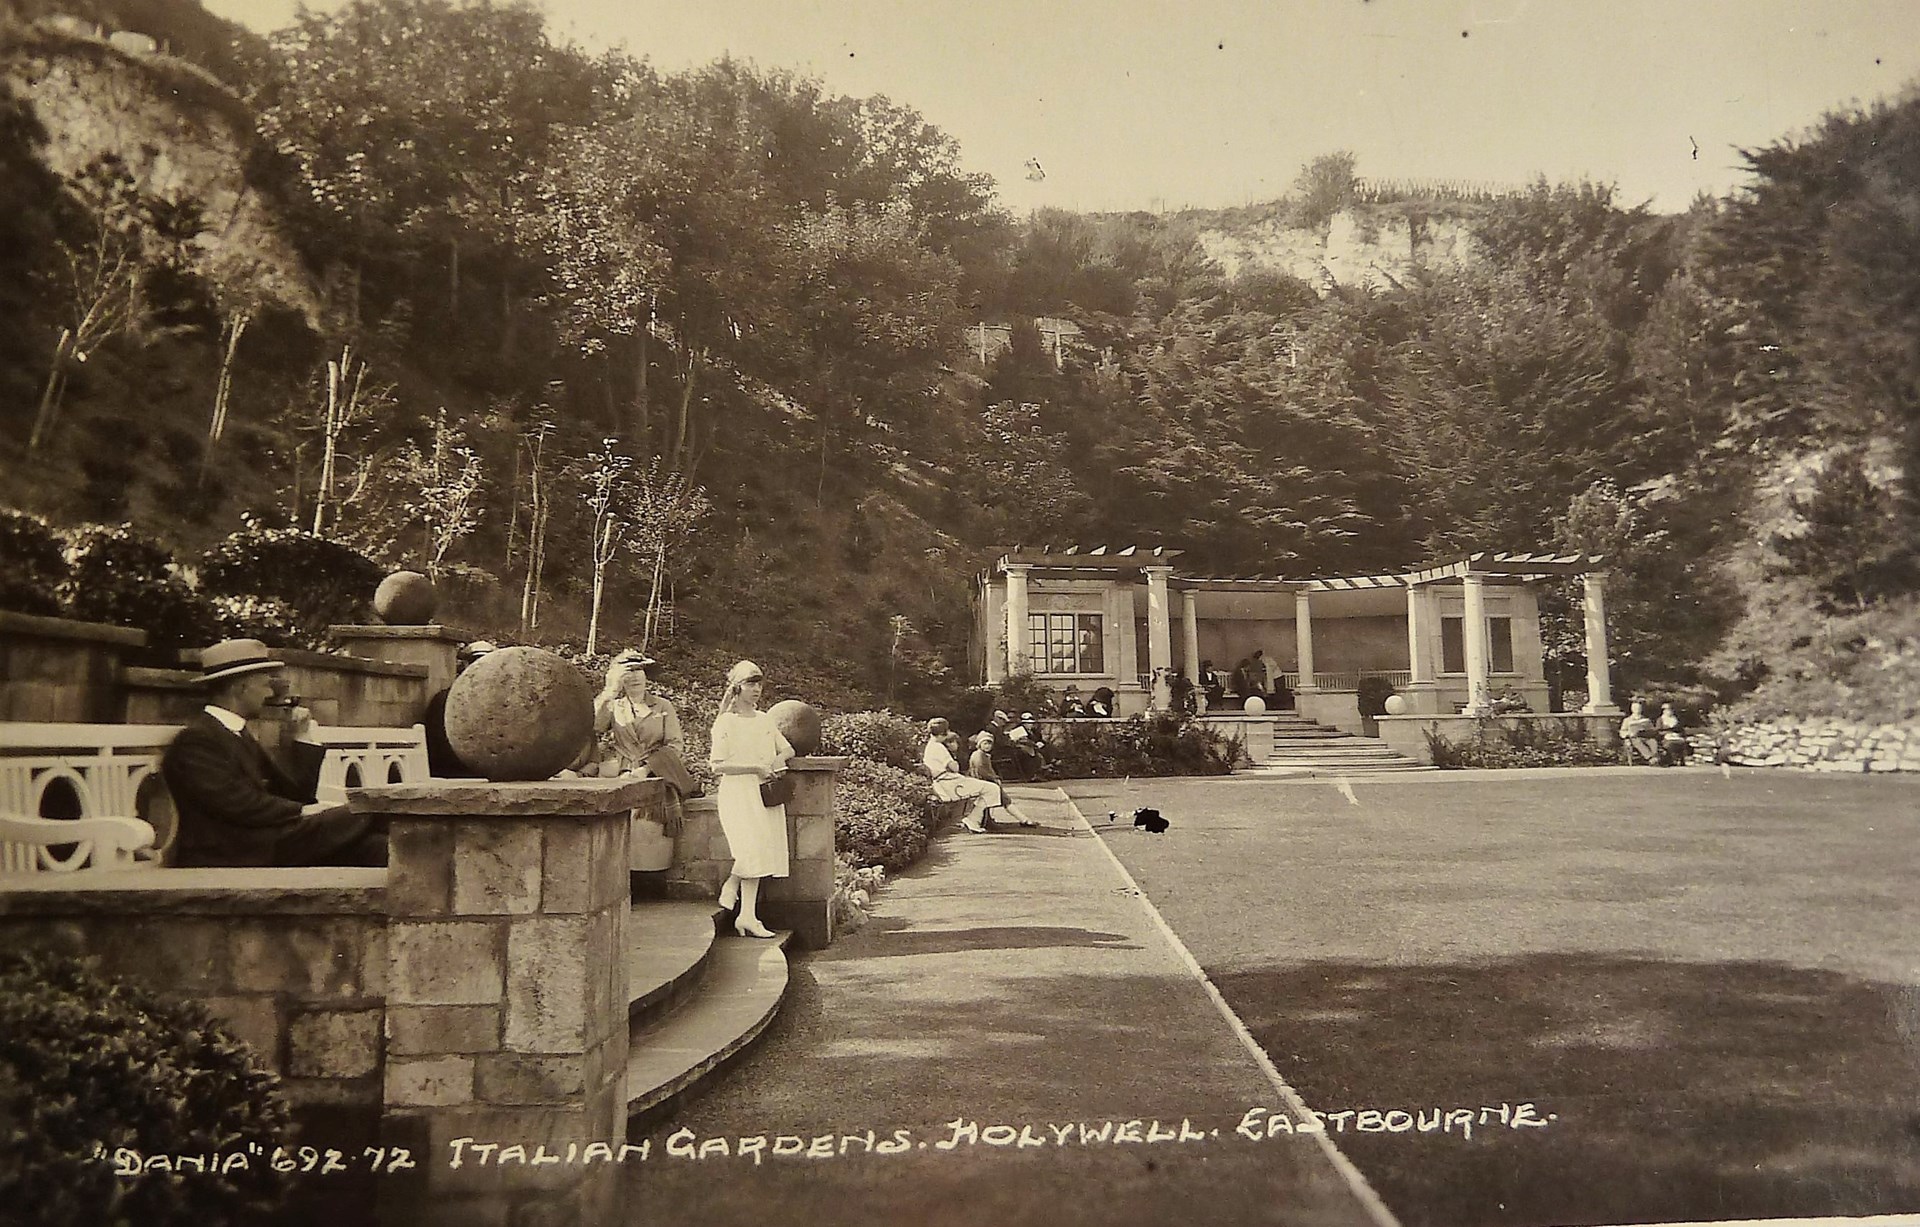 The Italian Gardens in the 1920's